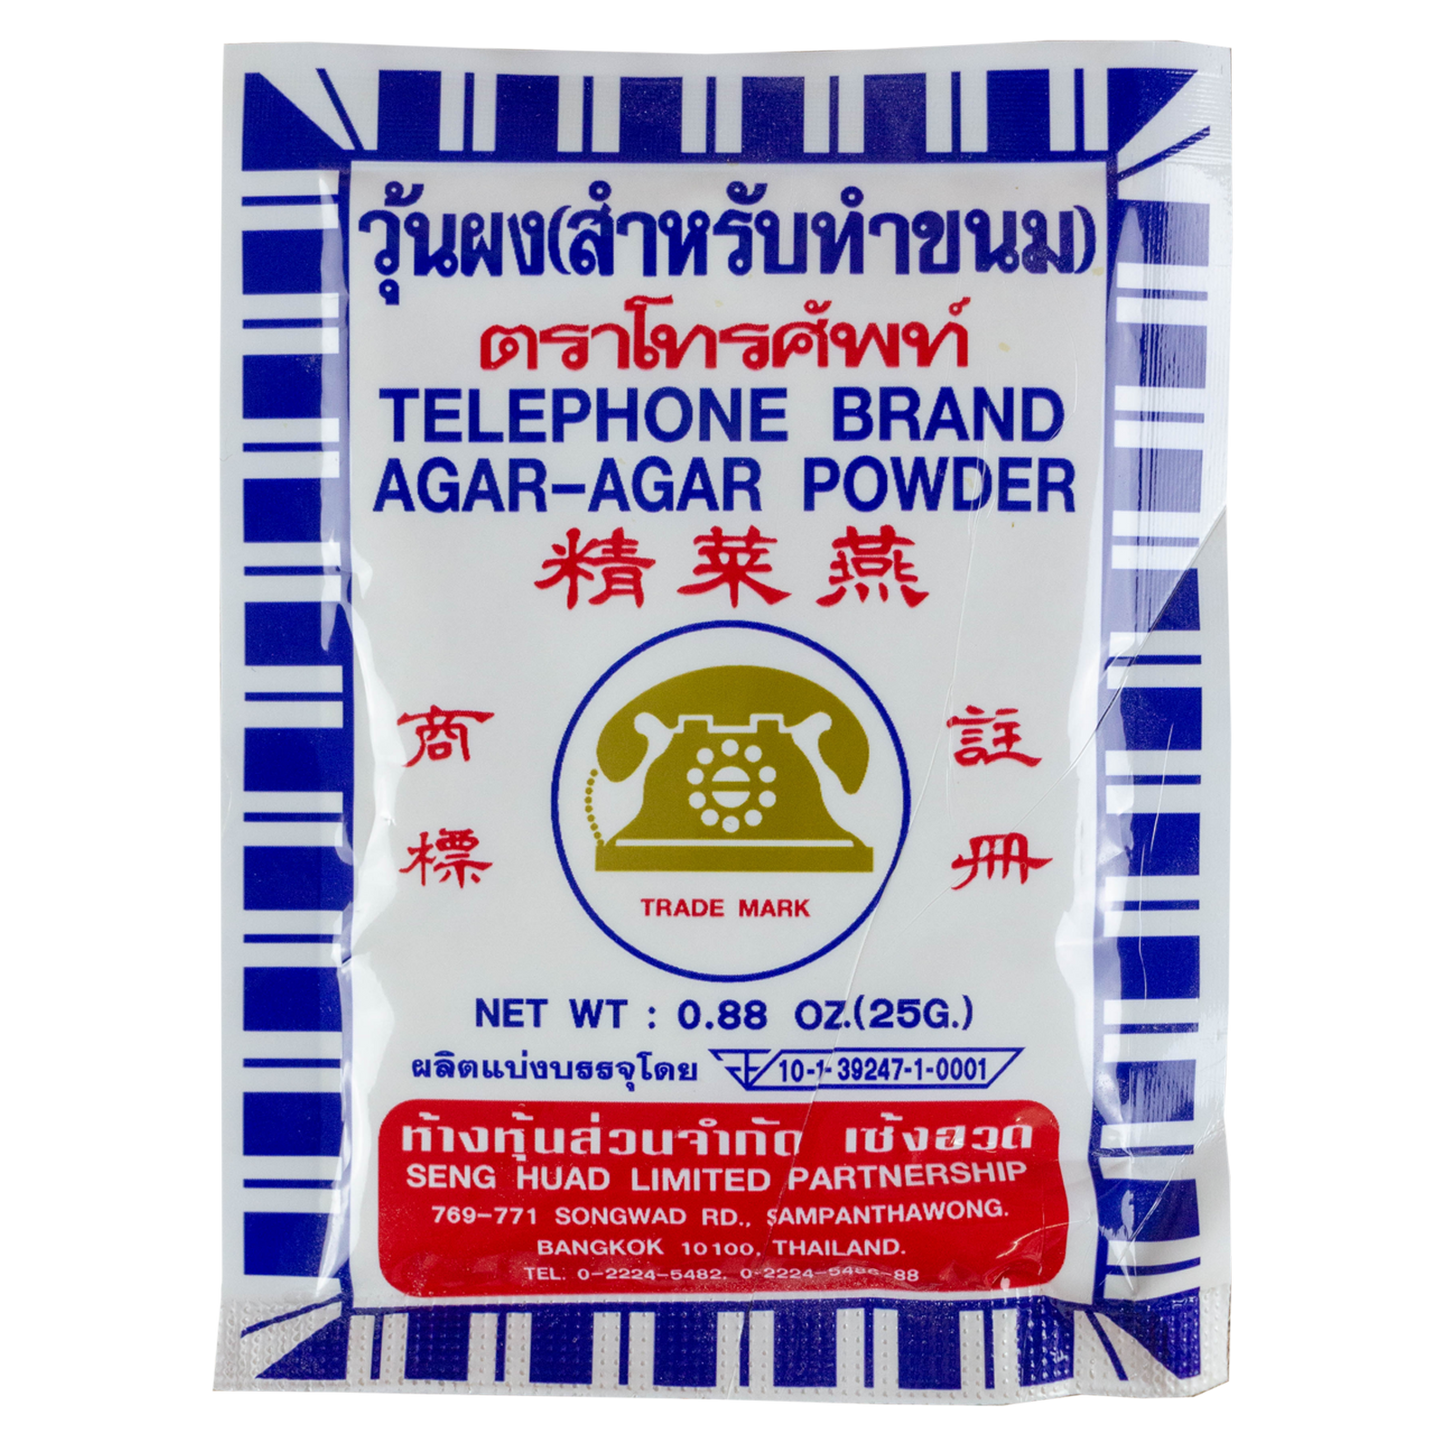 Telephone Brand - Agar-Agar Powder